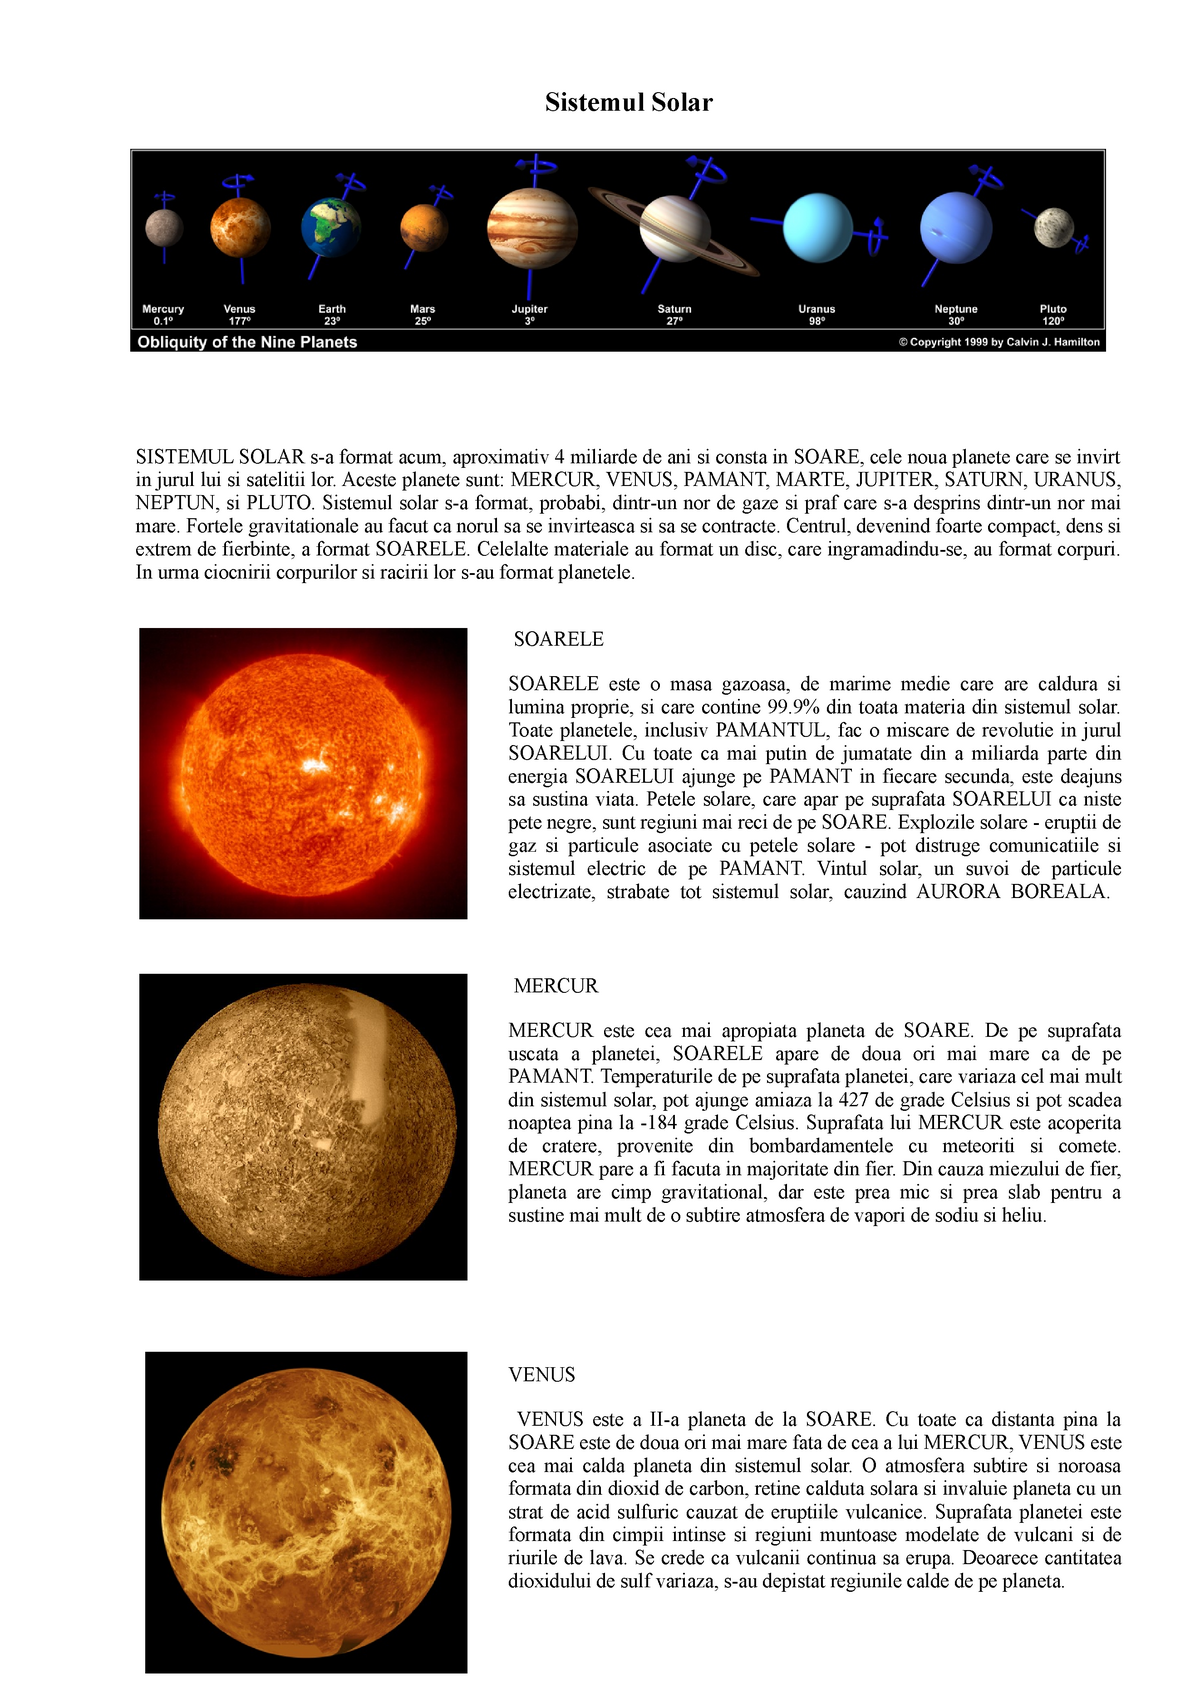 Sistemul Solar simple notiuni introductive - Sistemul Solar ...